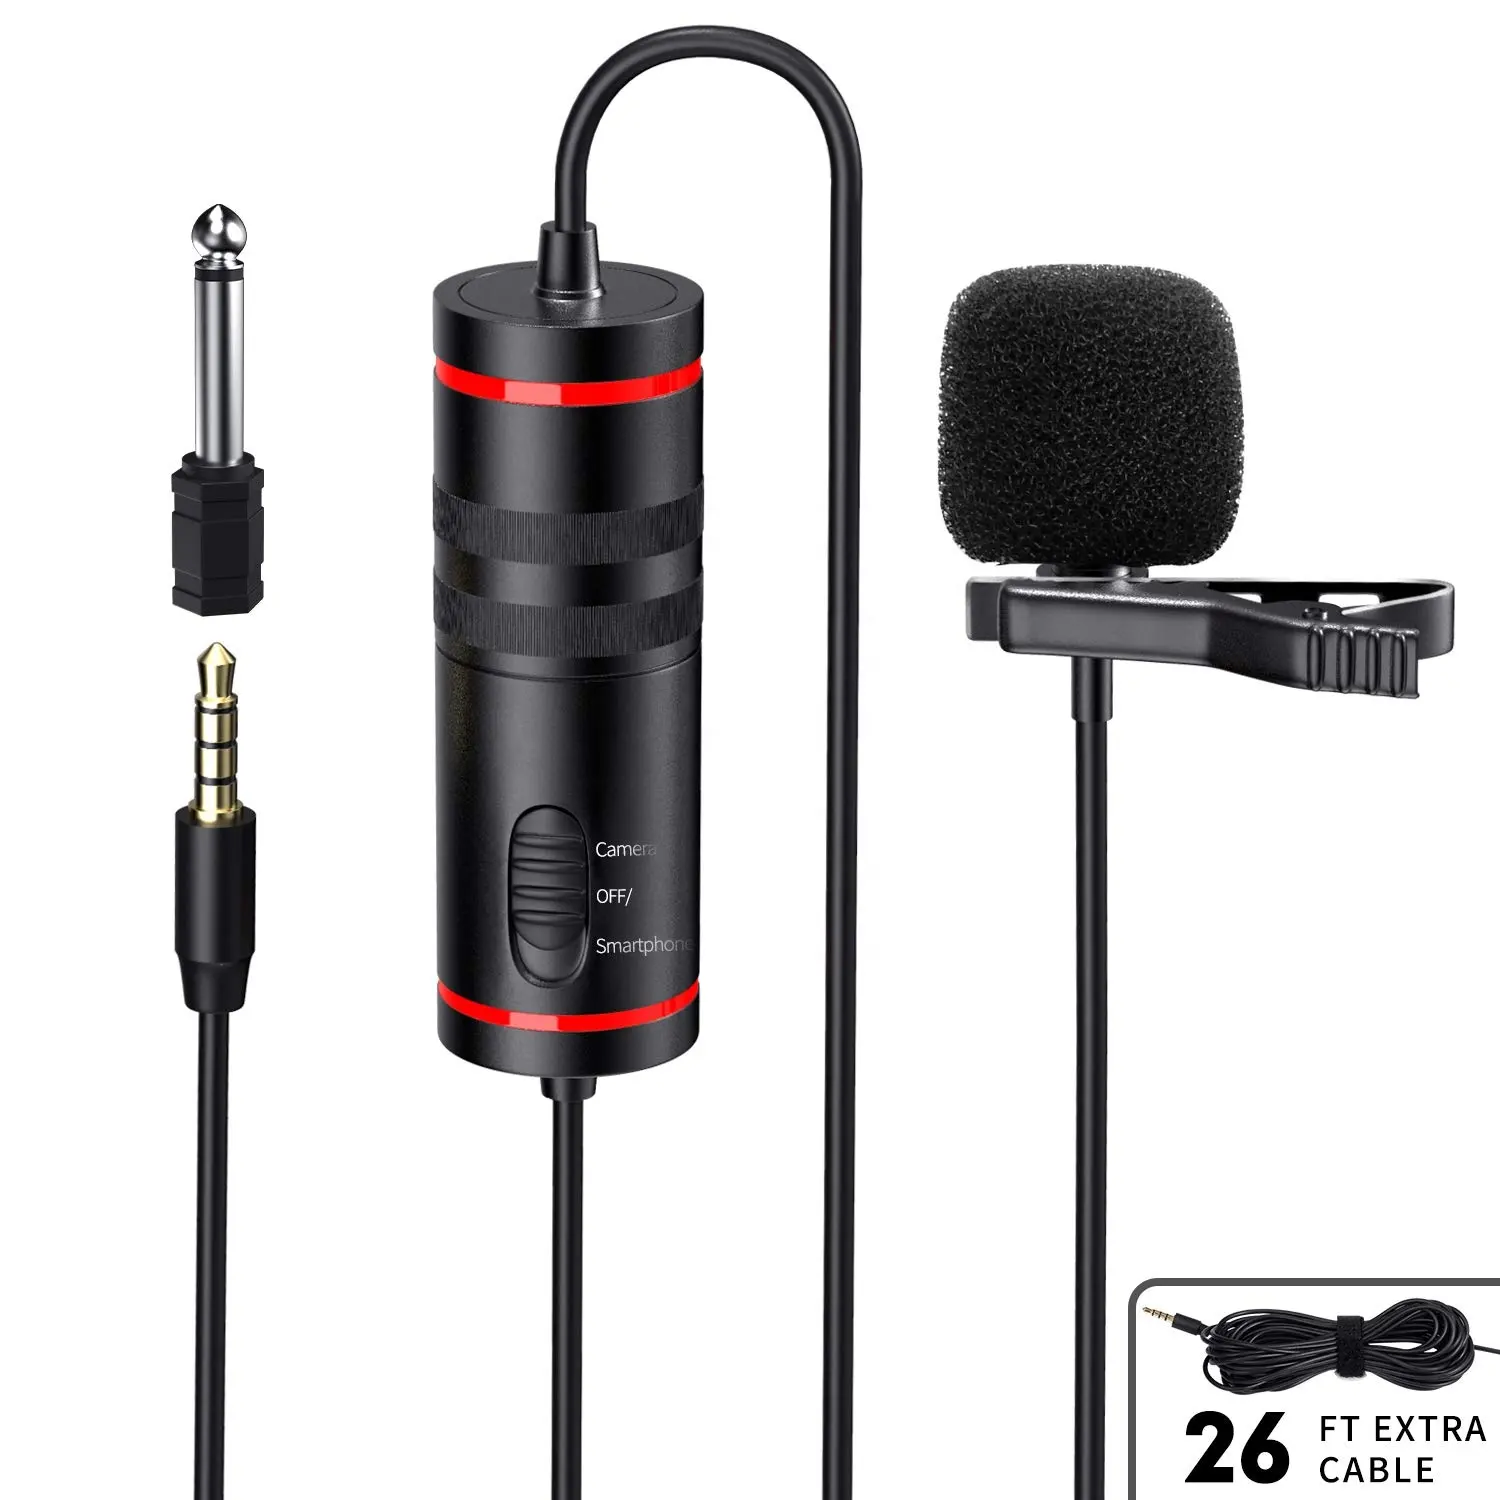 Harga Grosir Mikrofon Lavalier Klip Lapel Kabel Mini 3.5Mm Mikrofon Digital Omni Directional Mic untuk Perekaman Telepon